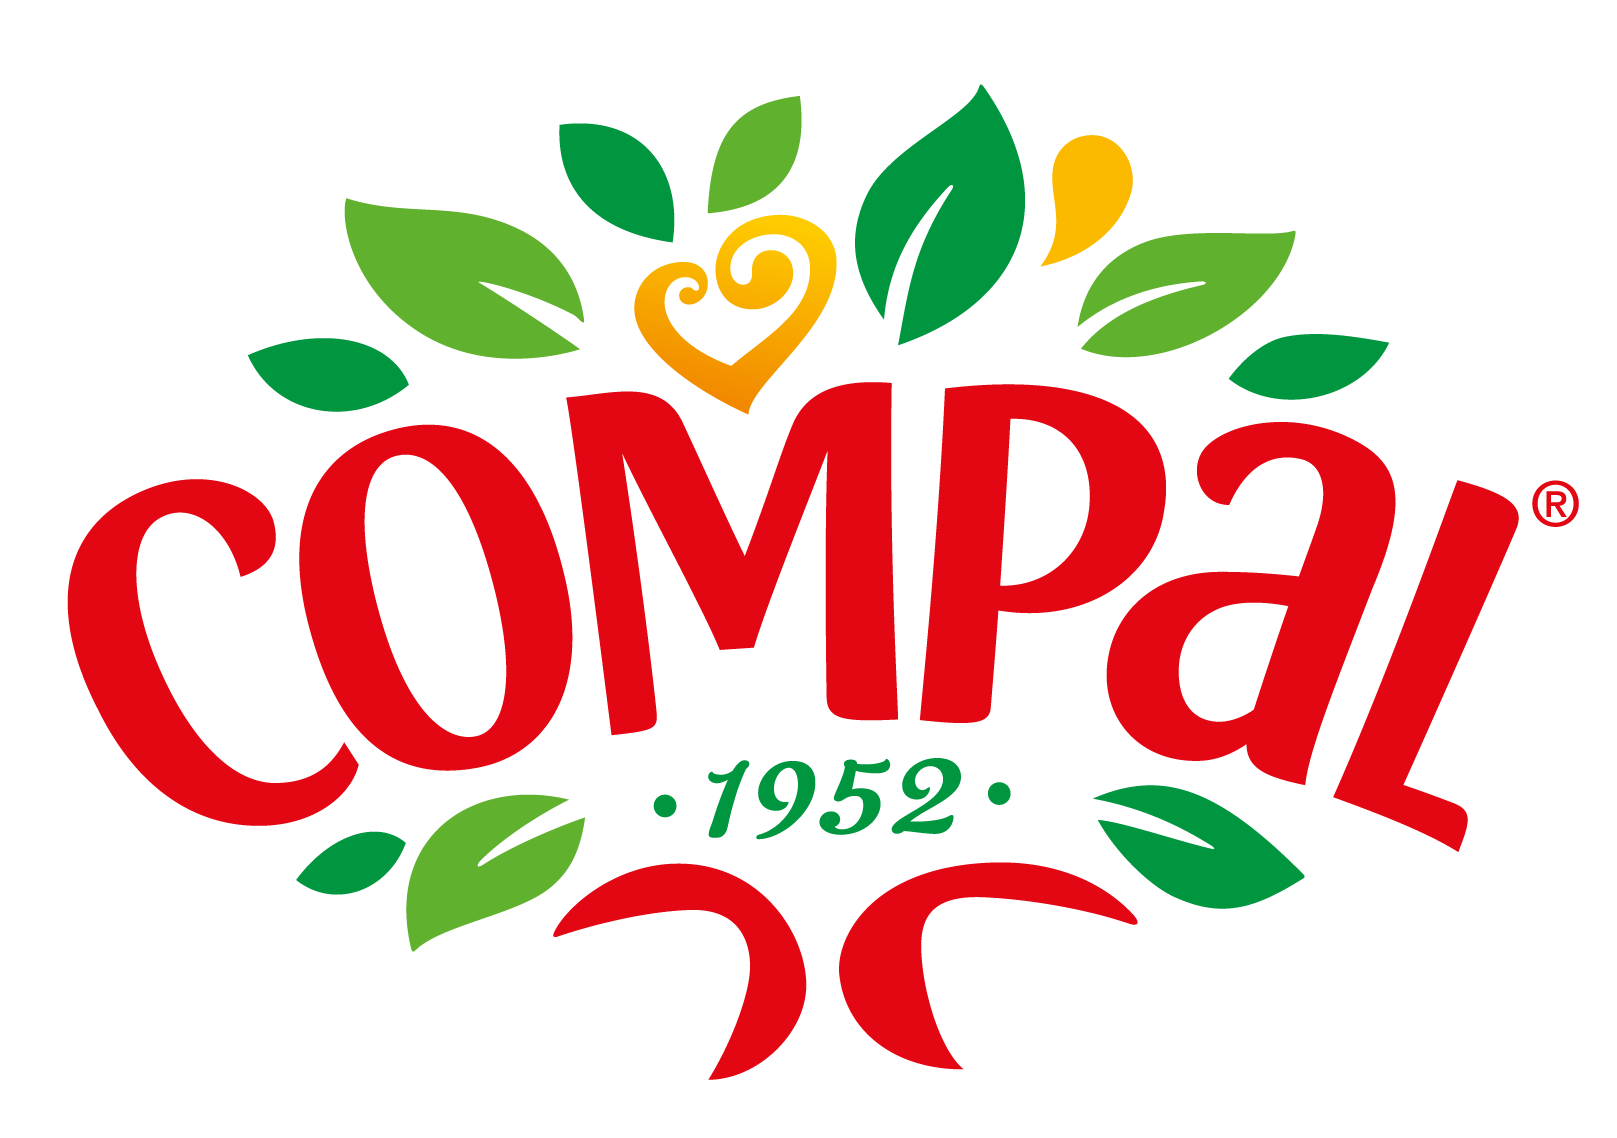 Compal Logo - Image - Logo compal new.png | Logopedia | FANDOM powered by Wikia